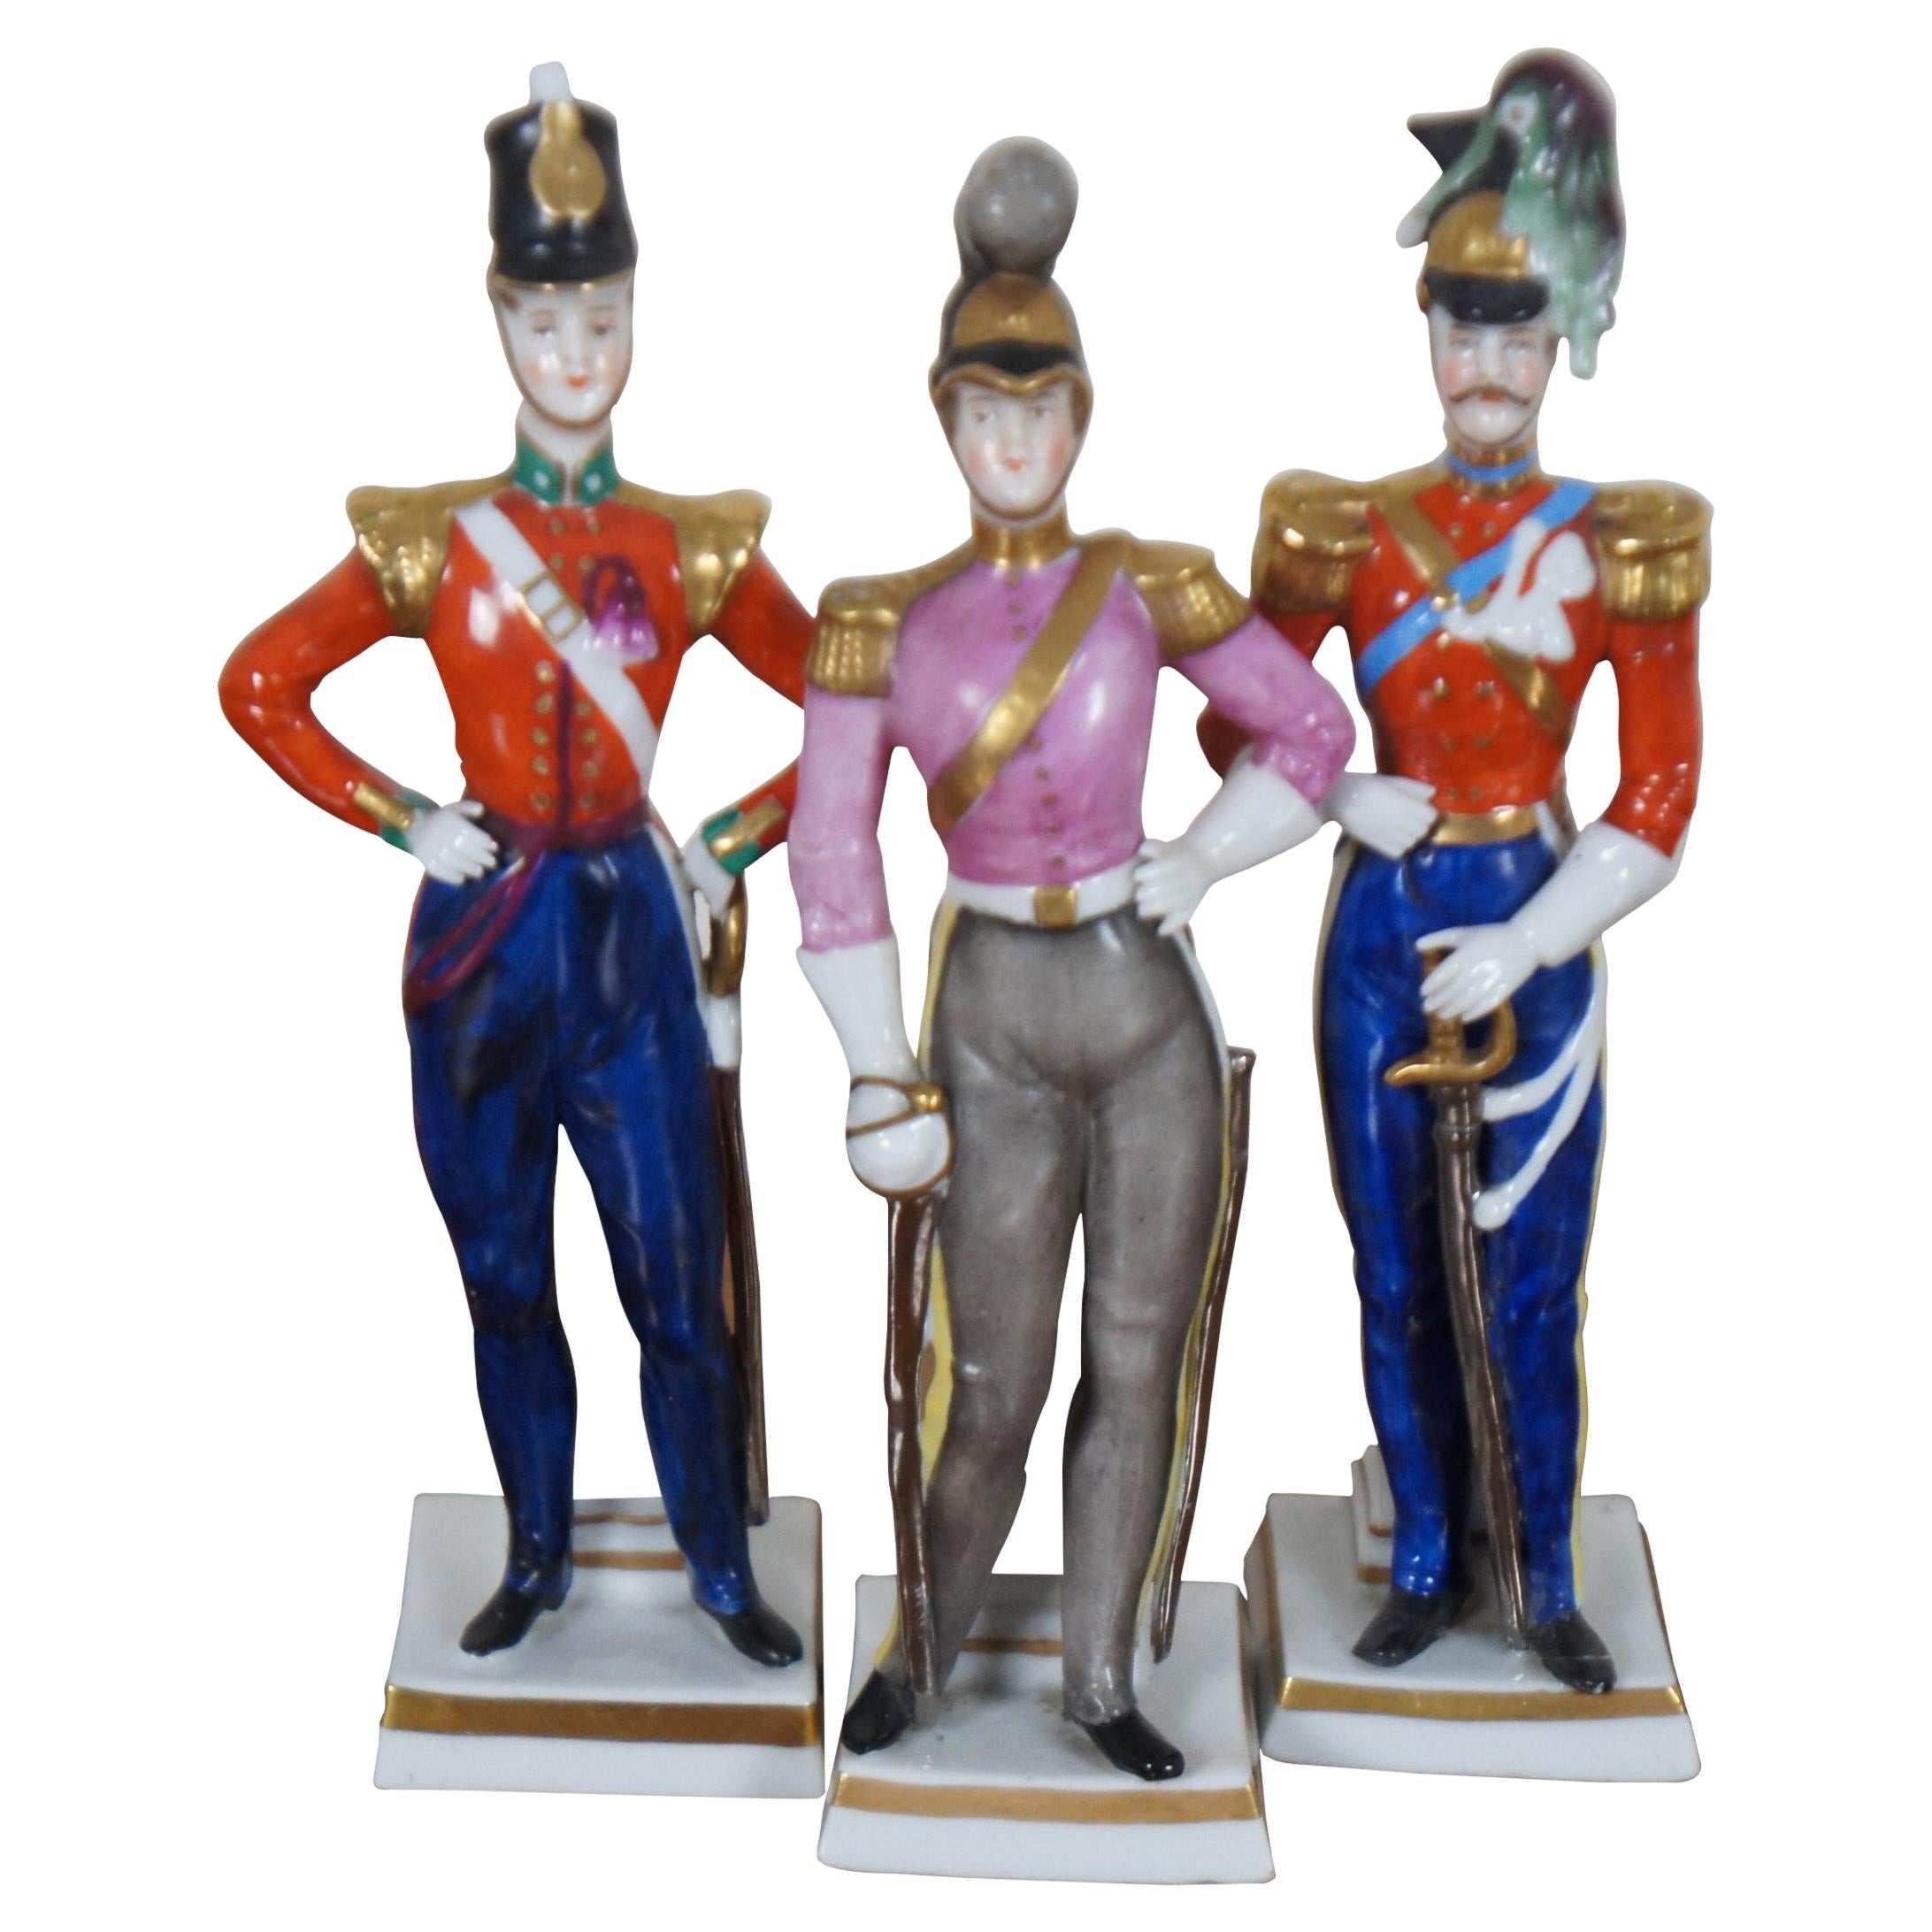 3 Rare Antique A.J. Uffrecht & Co Germany Porcelain Soldier Figurines Dresden  For Sale